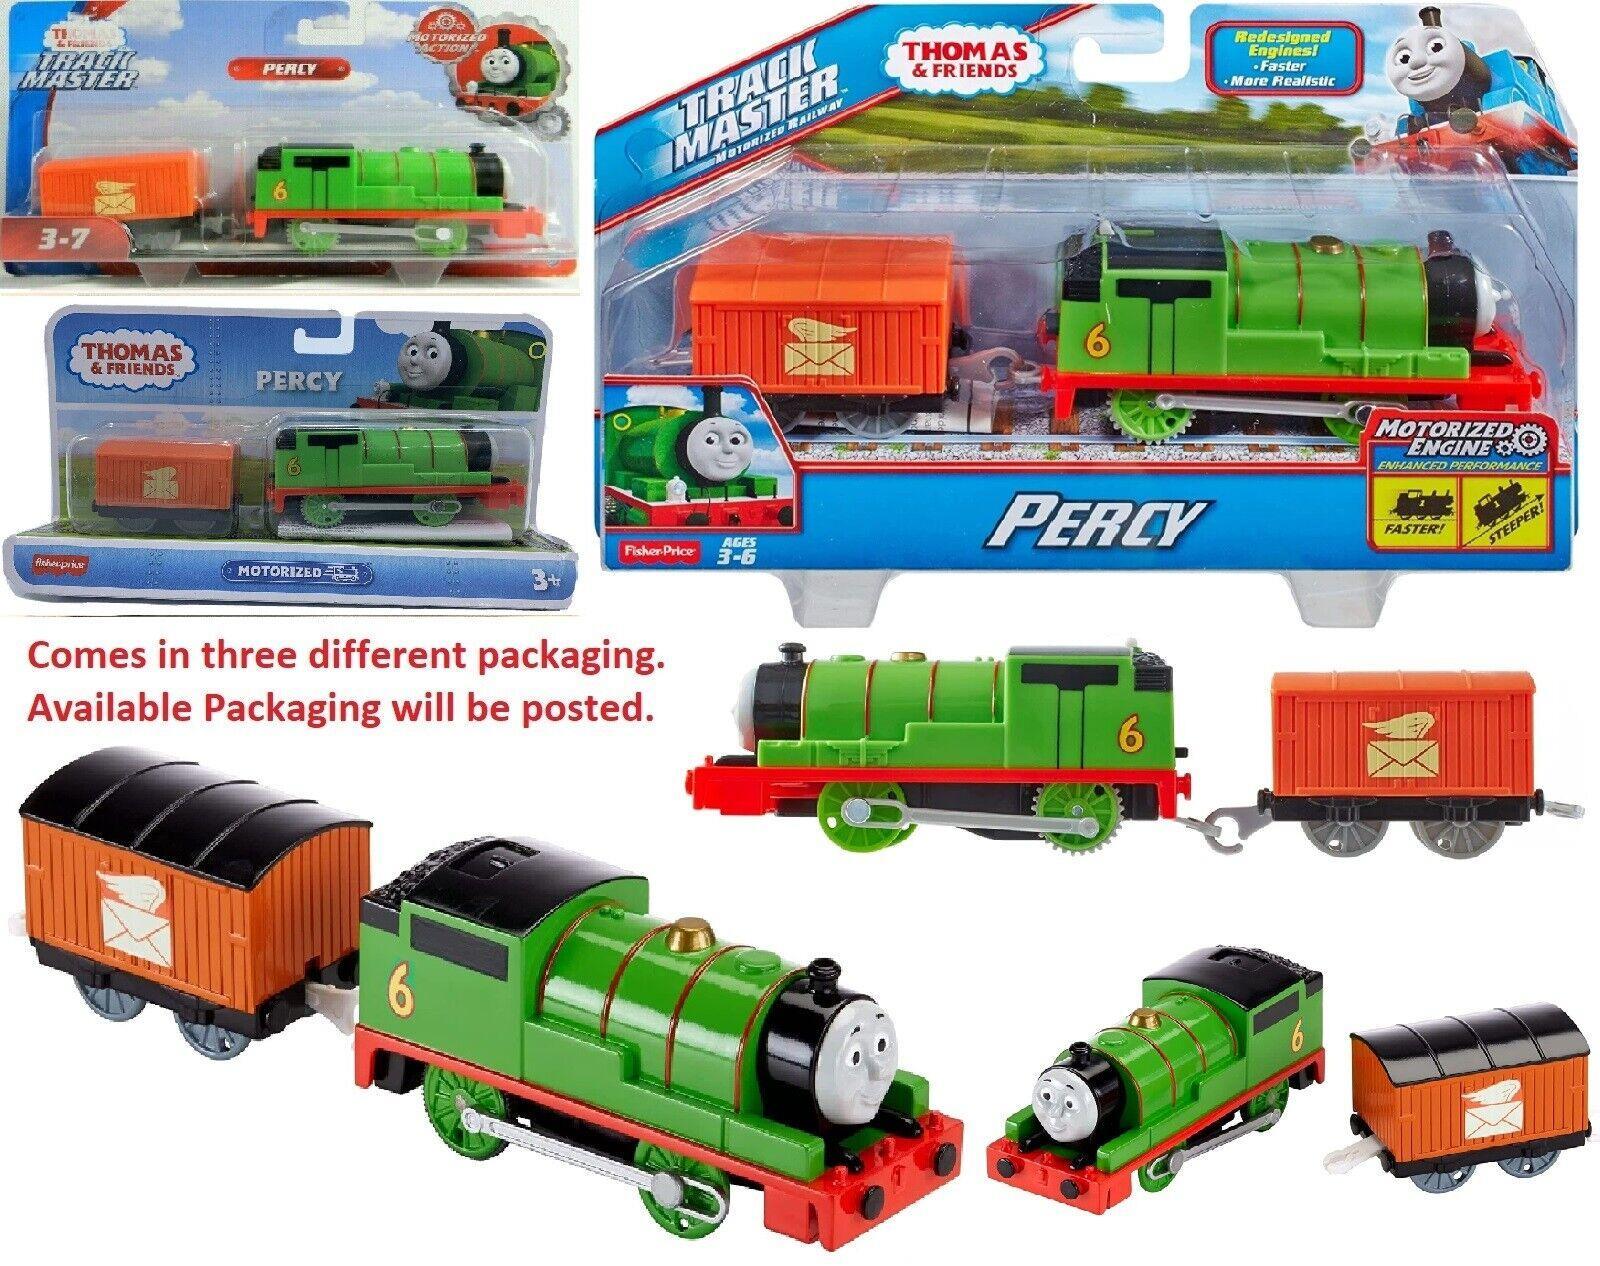 Thomas & Friends Motorised Trackmaster. Master Percy Train Engine, Multicolor